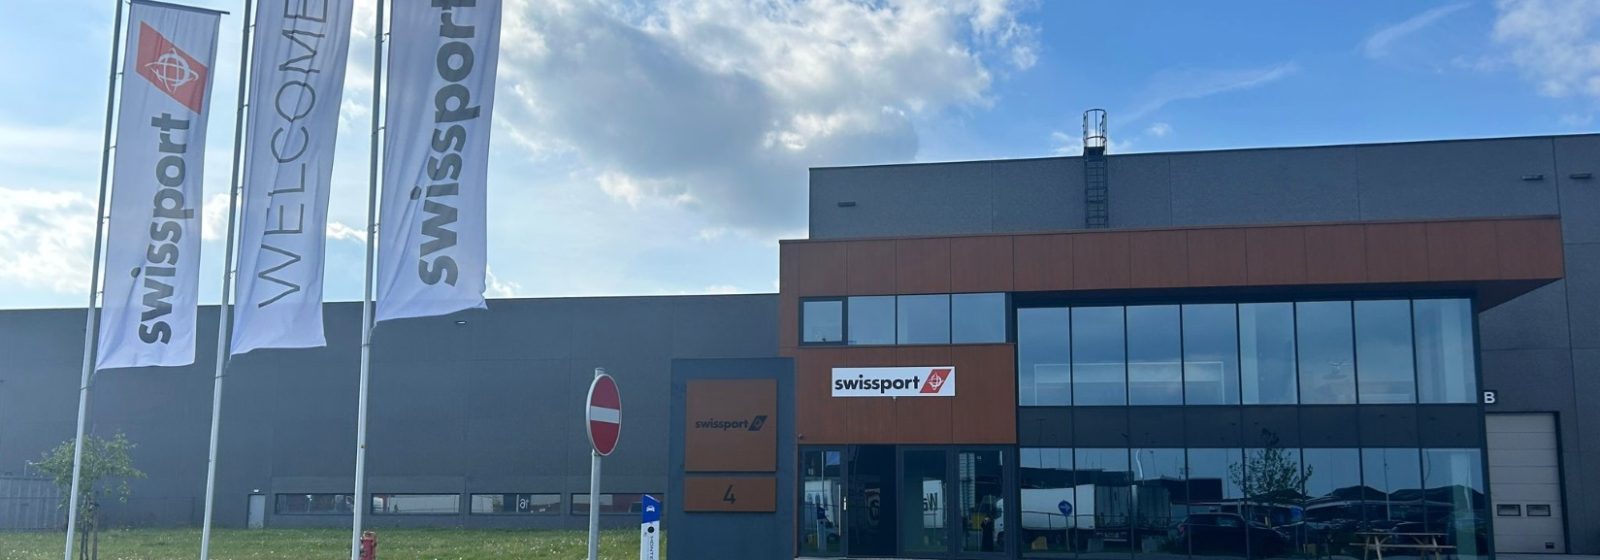 Derde luchtvrachtcentrum van Swissport op Liege Airport